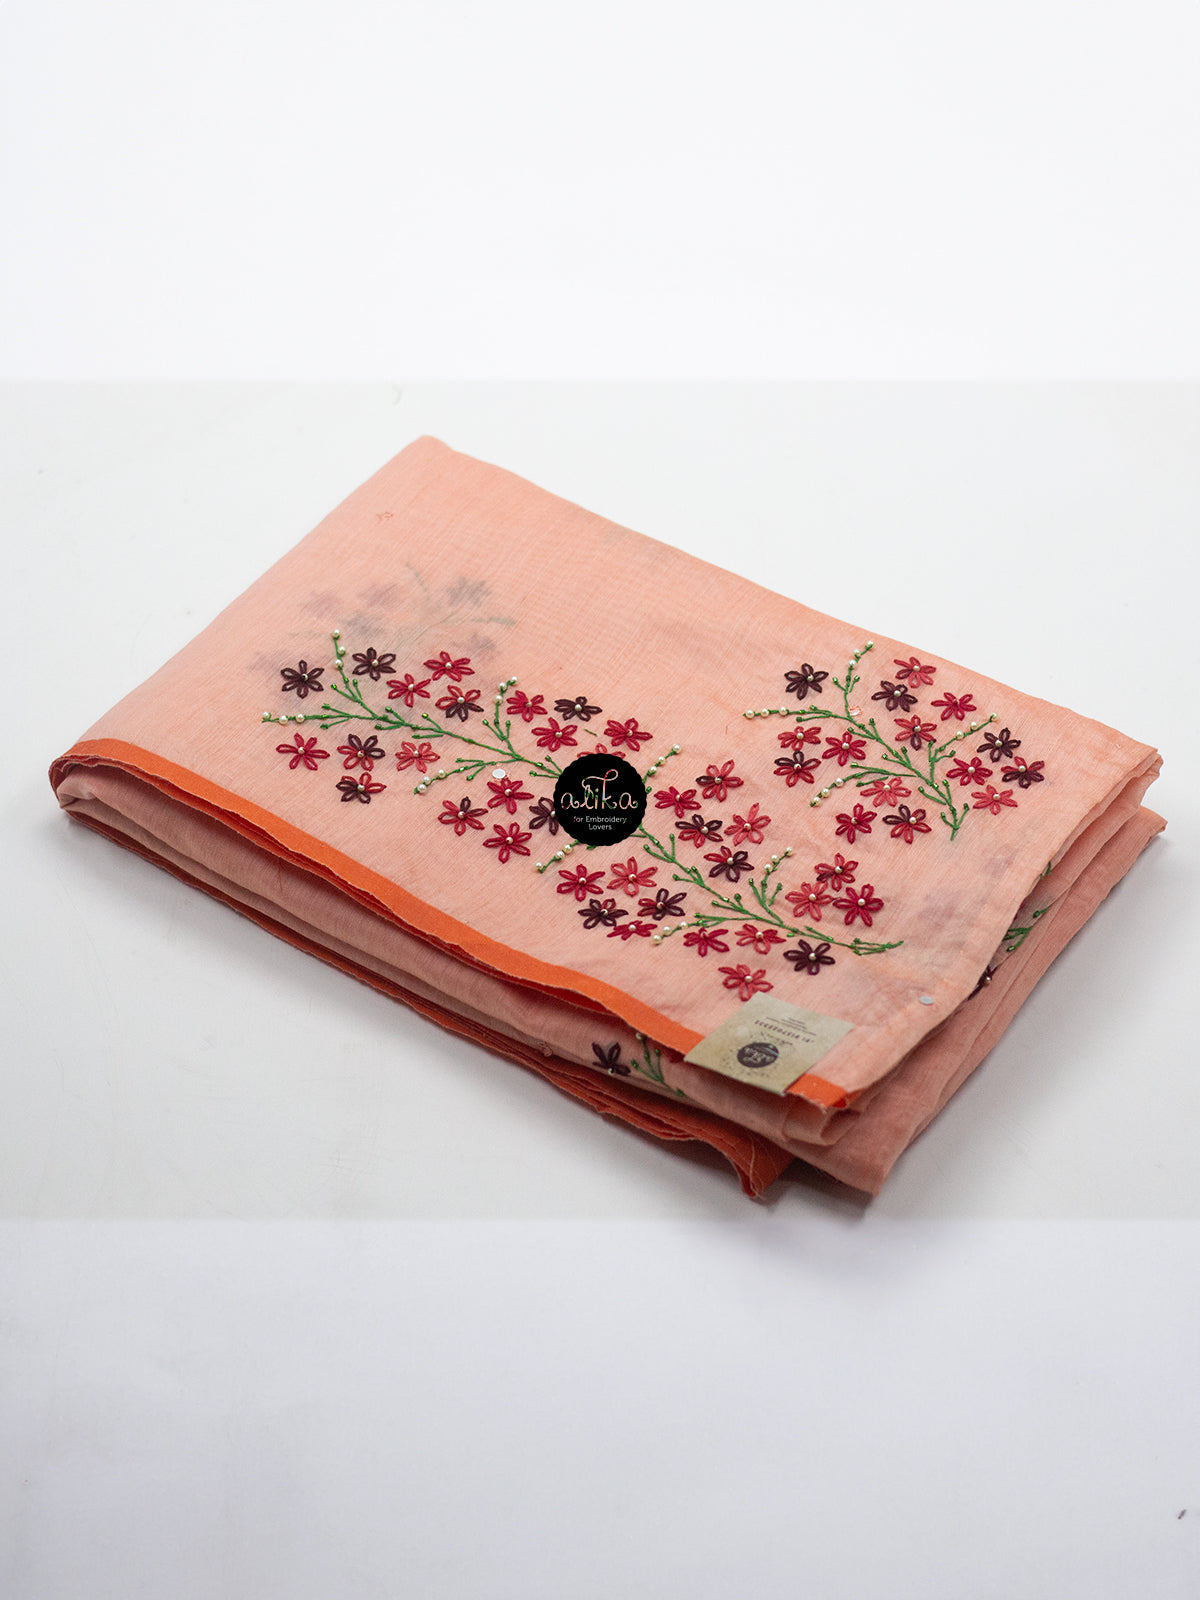 🍑✨ Peachy Elegance: Chanderi Silk Mirror Work Saree with Lazy Daisy Floral Embroidery ✨🌸